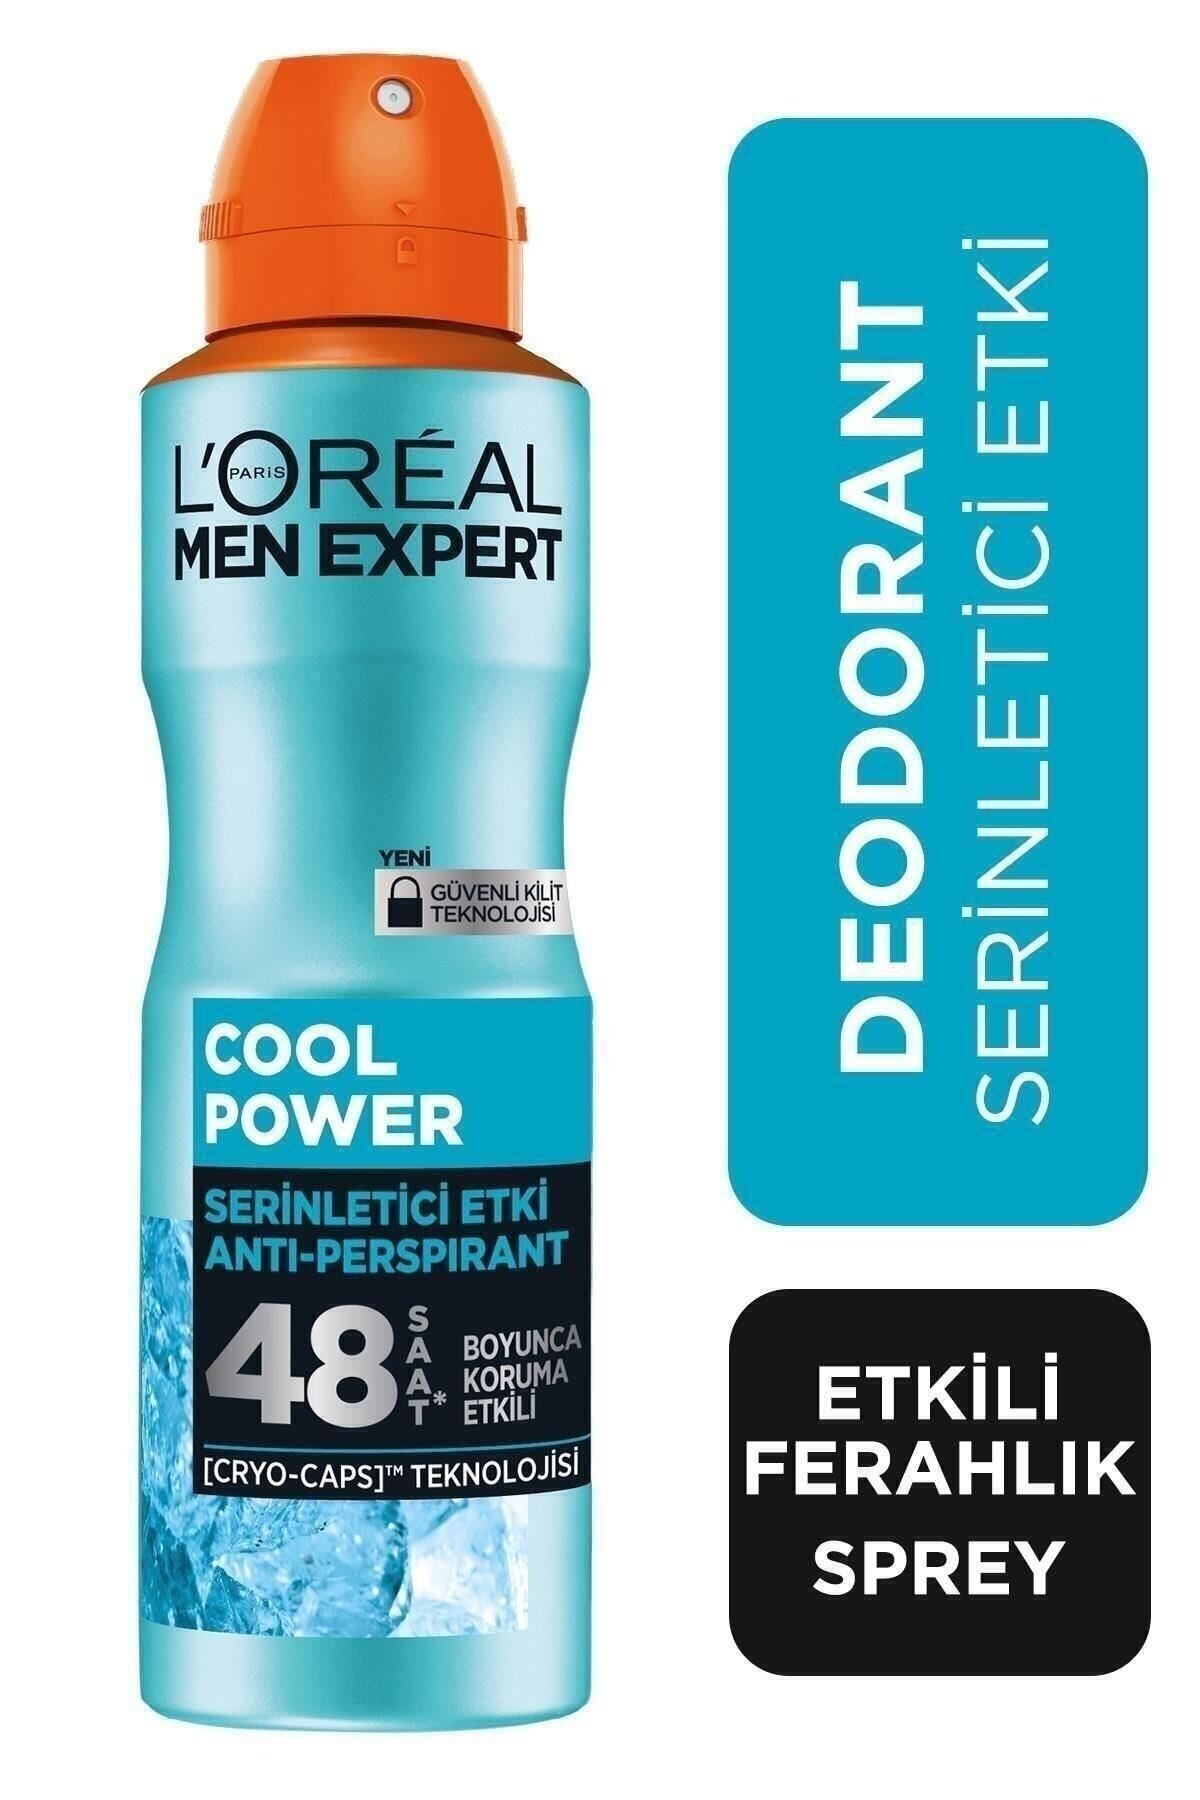 L'Oreal Paris Men Expert Cool Power Anti Perspirant Serinletici Etki Erkek Sprey Deodorant 150ml